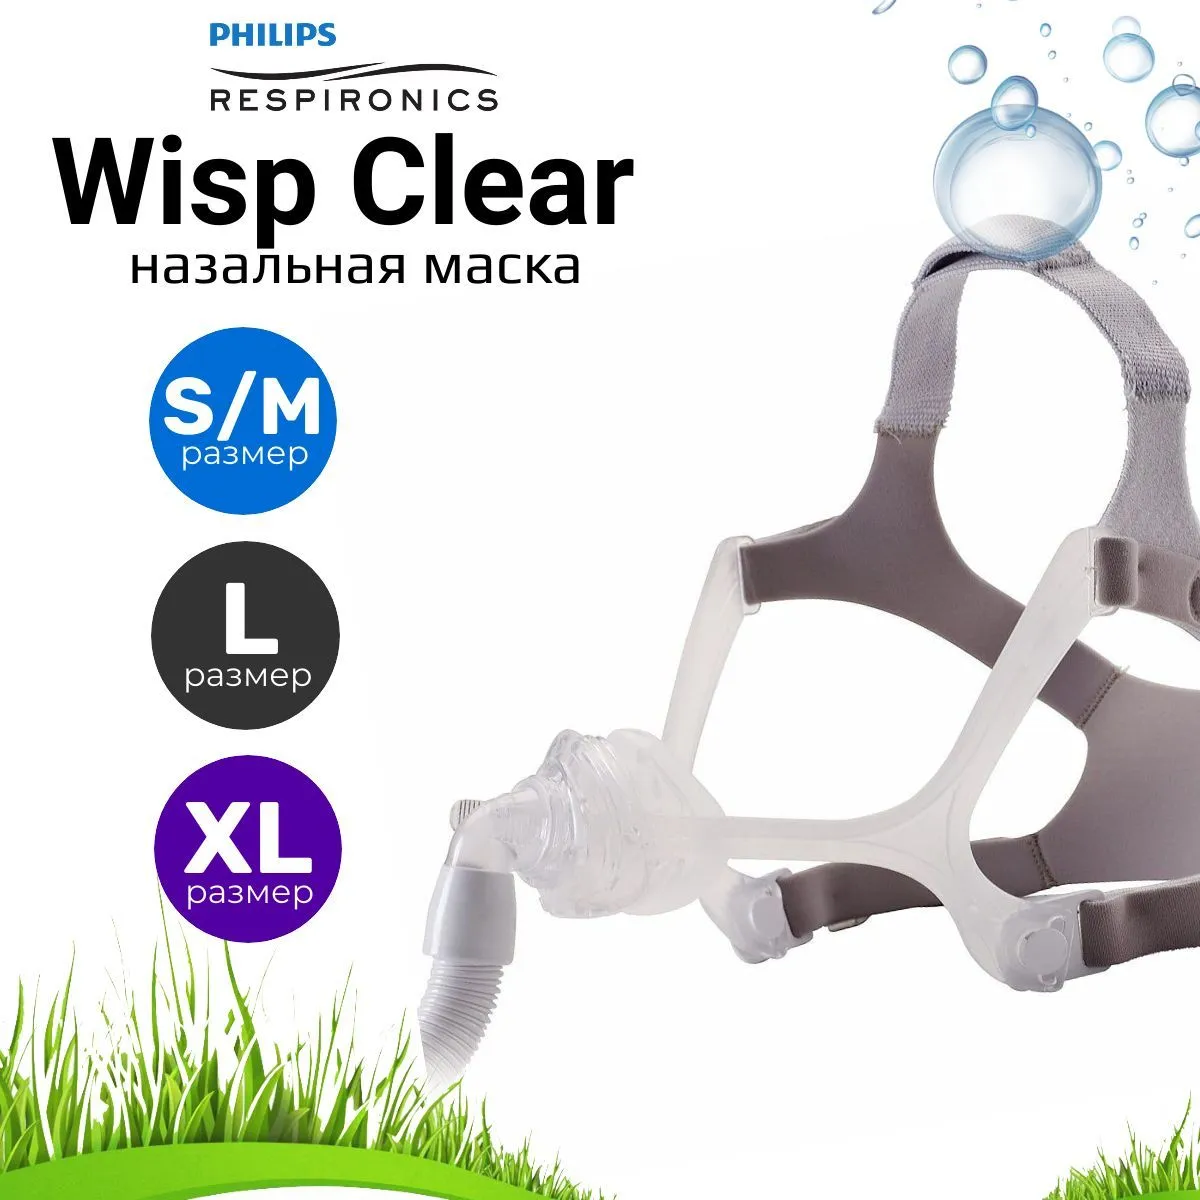 Philips Wisp Clear (в комплекте 3 размера) маска назальная для СИПАП